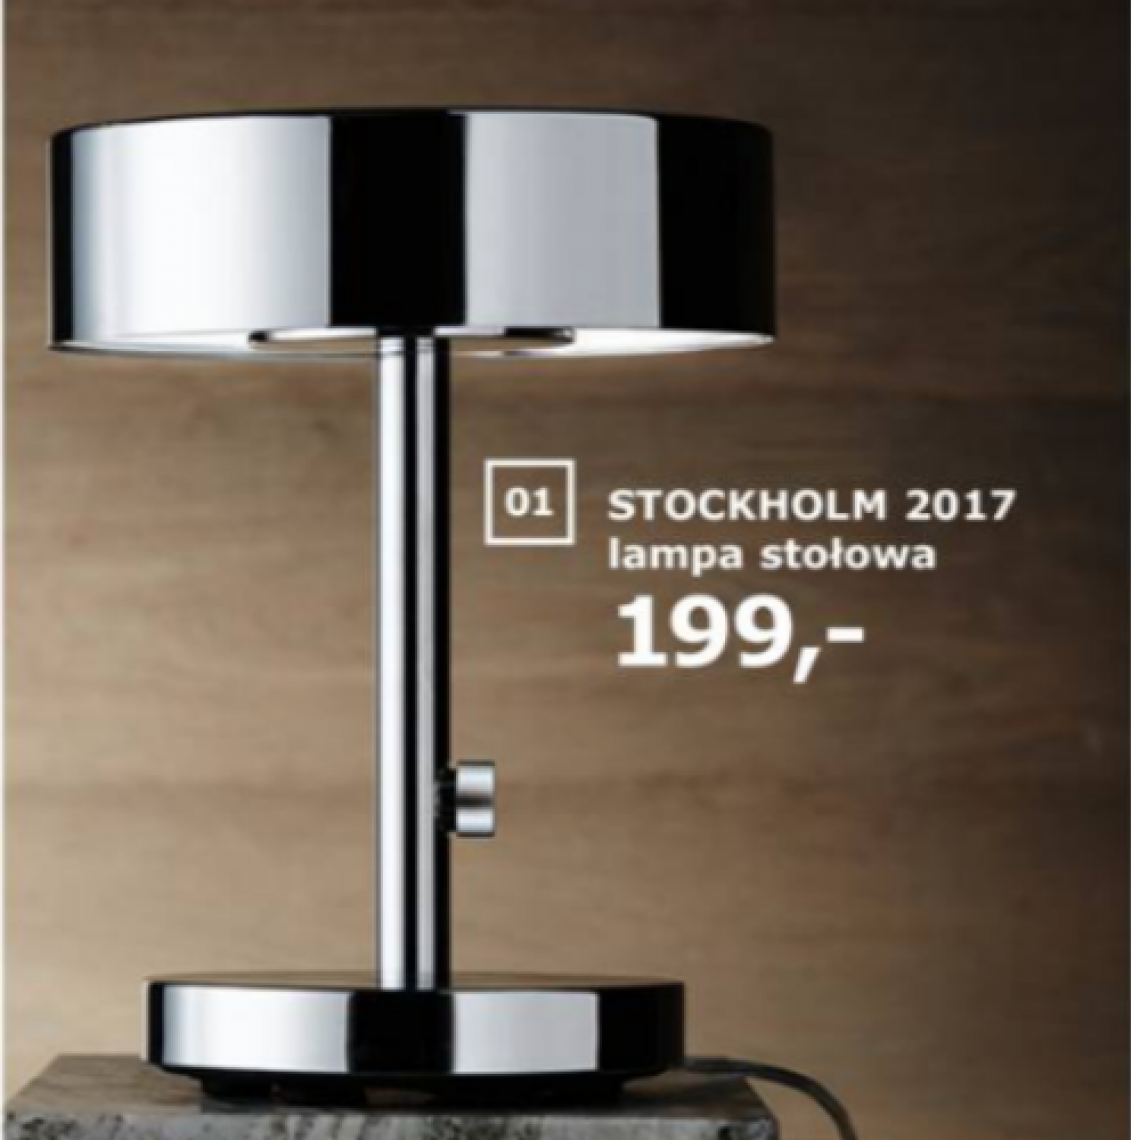 Ikea katalog - lampa stołowa